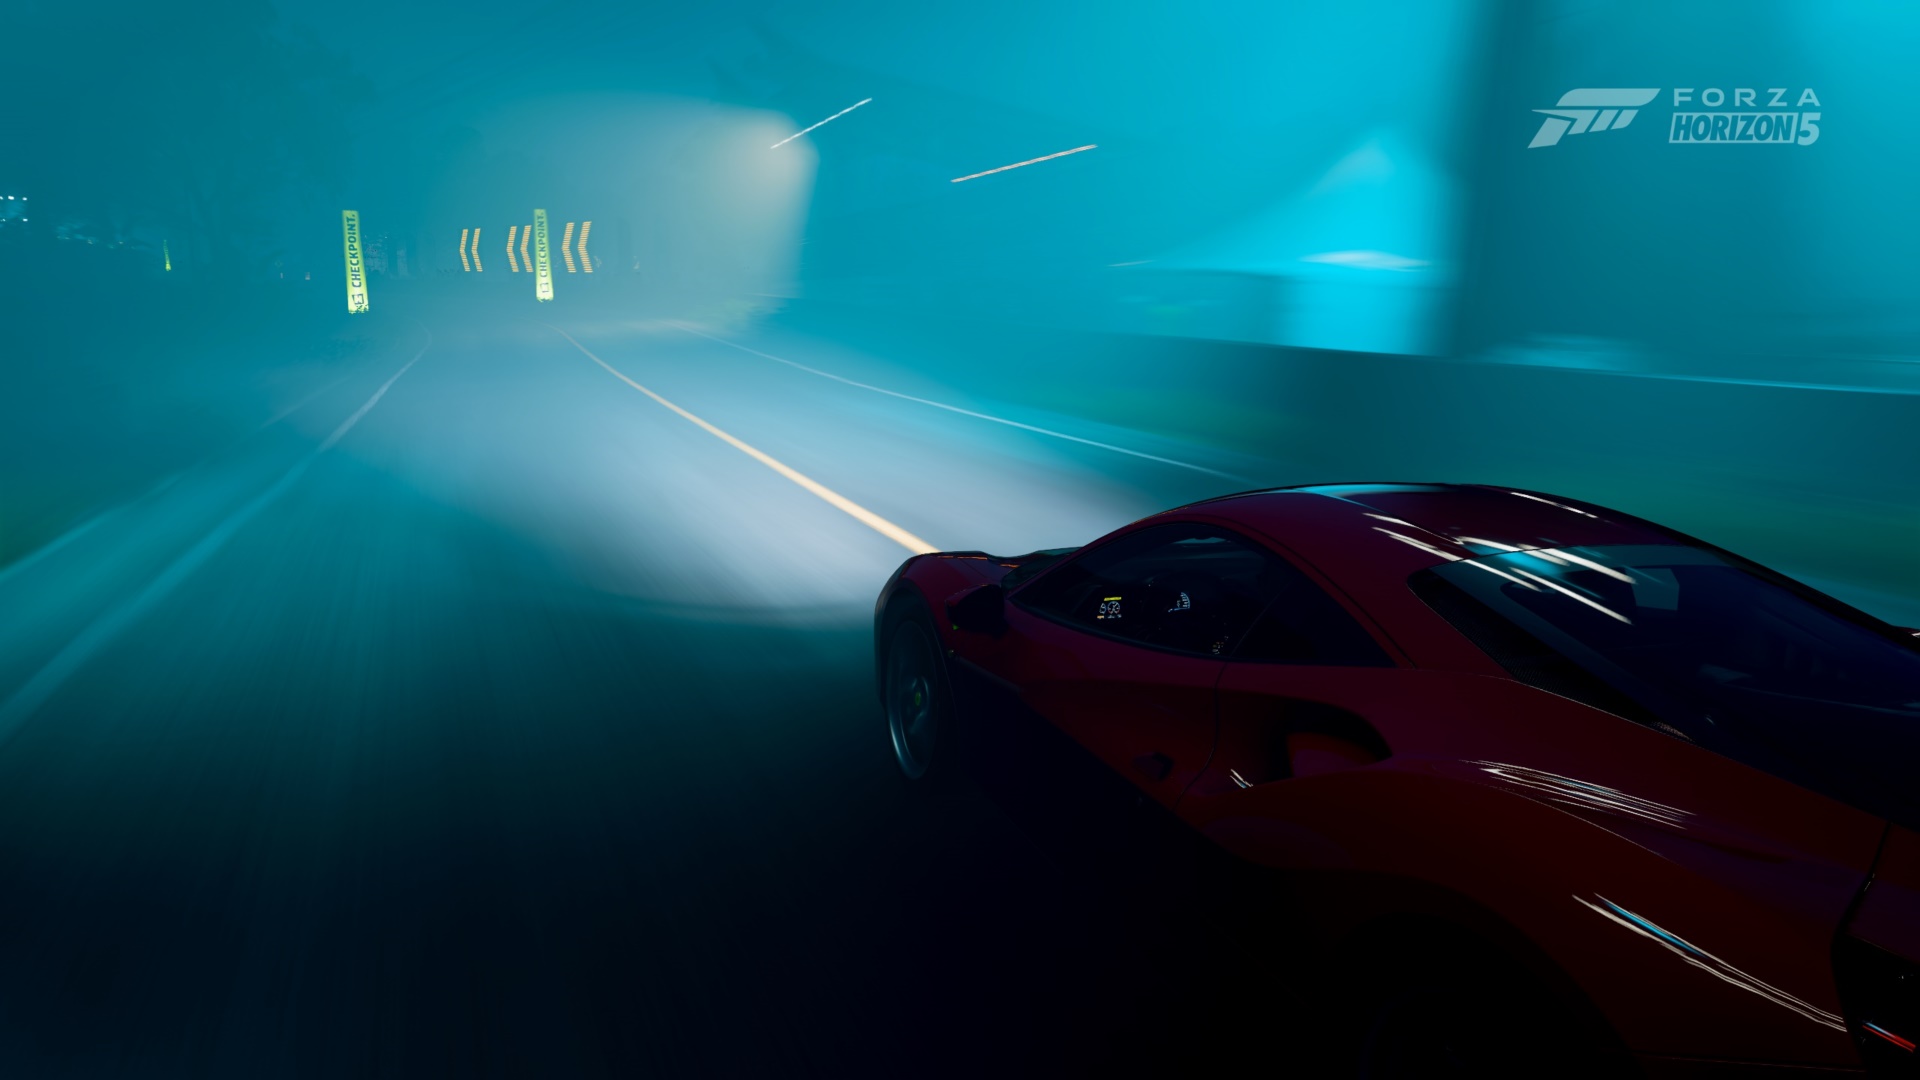 Forza Horizon 5 Screen Shot Night Neon Ferrari Road Car Neon Blue Italian Cars Stellantis Playground 1920x1080